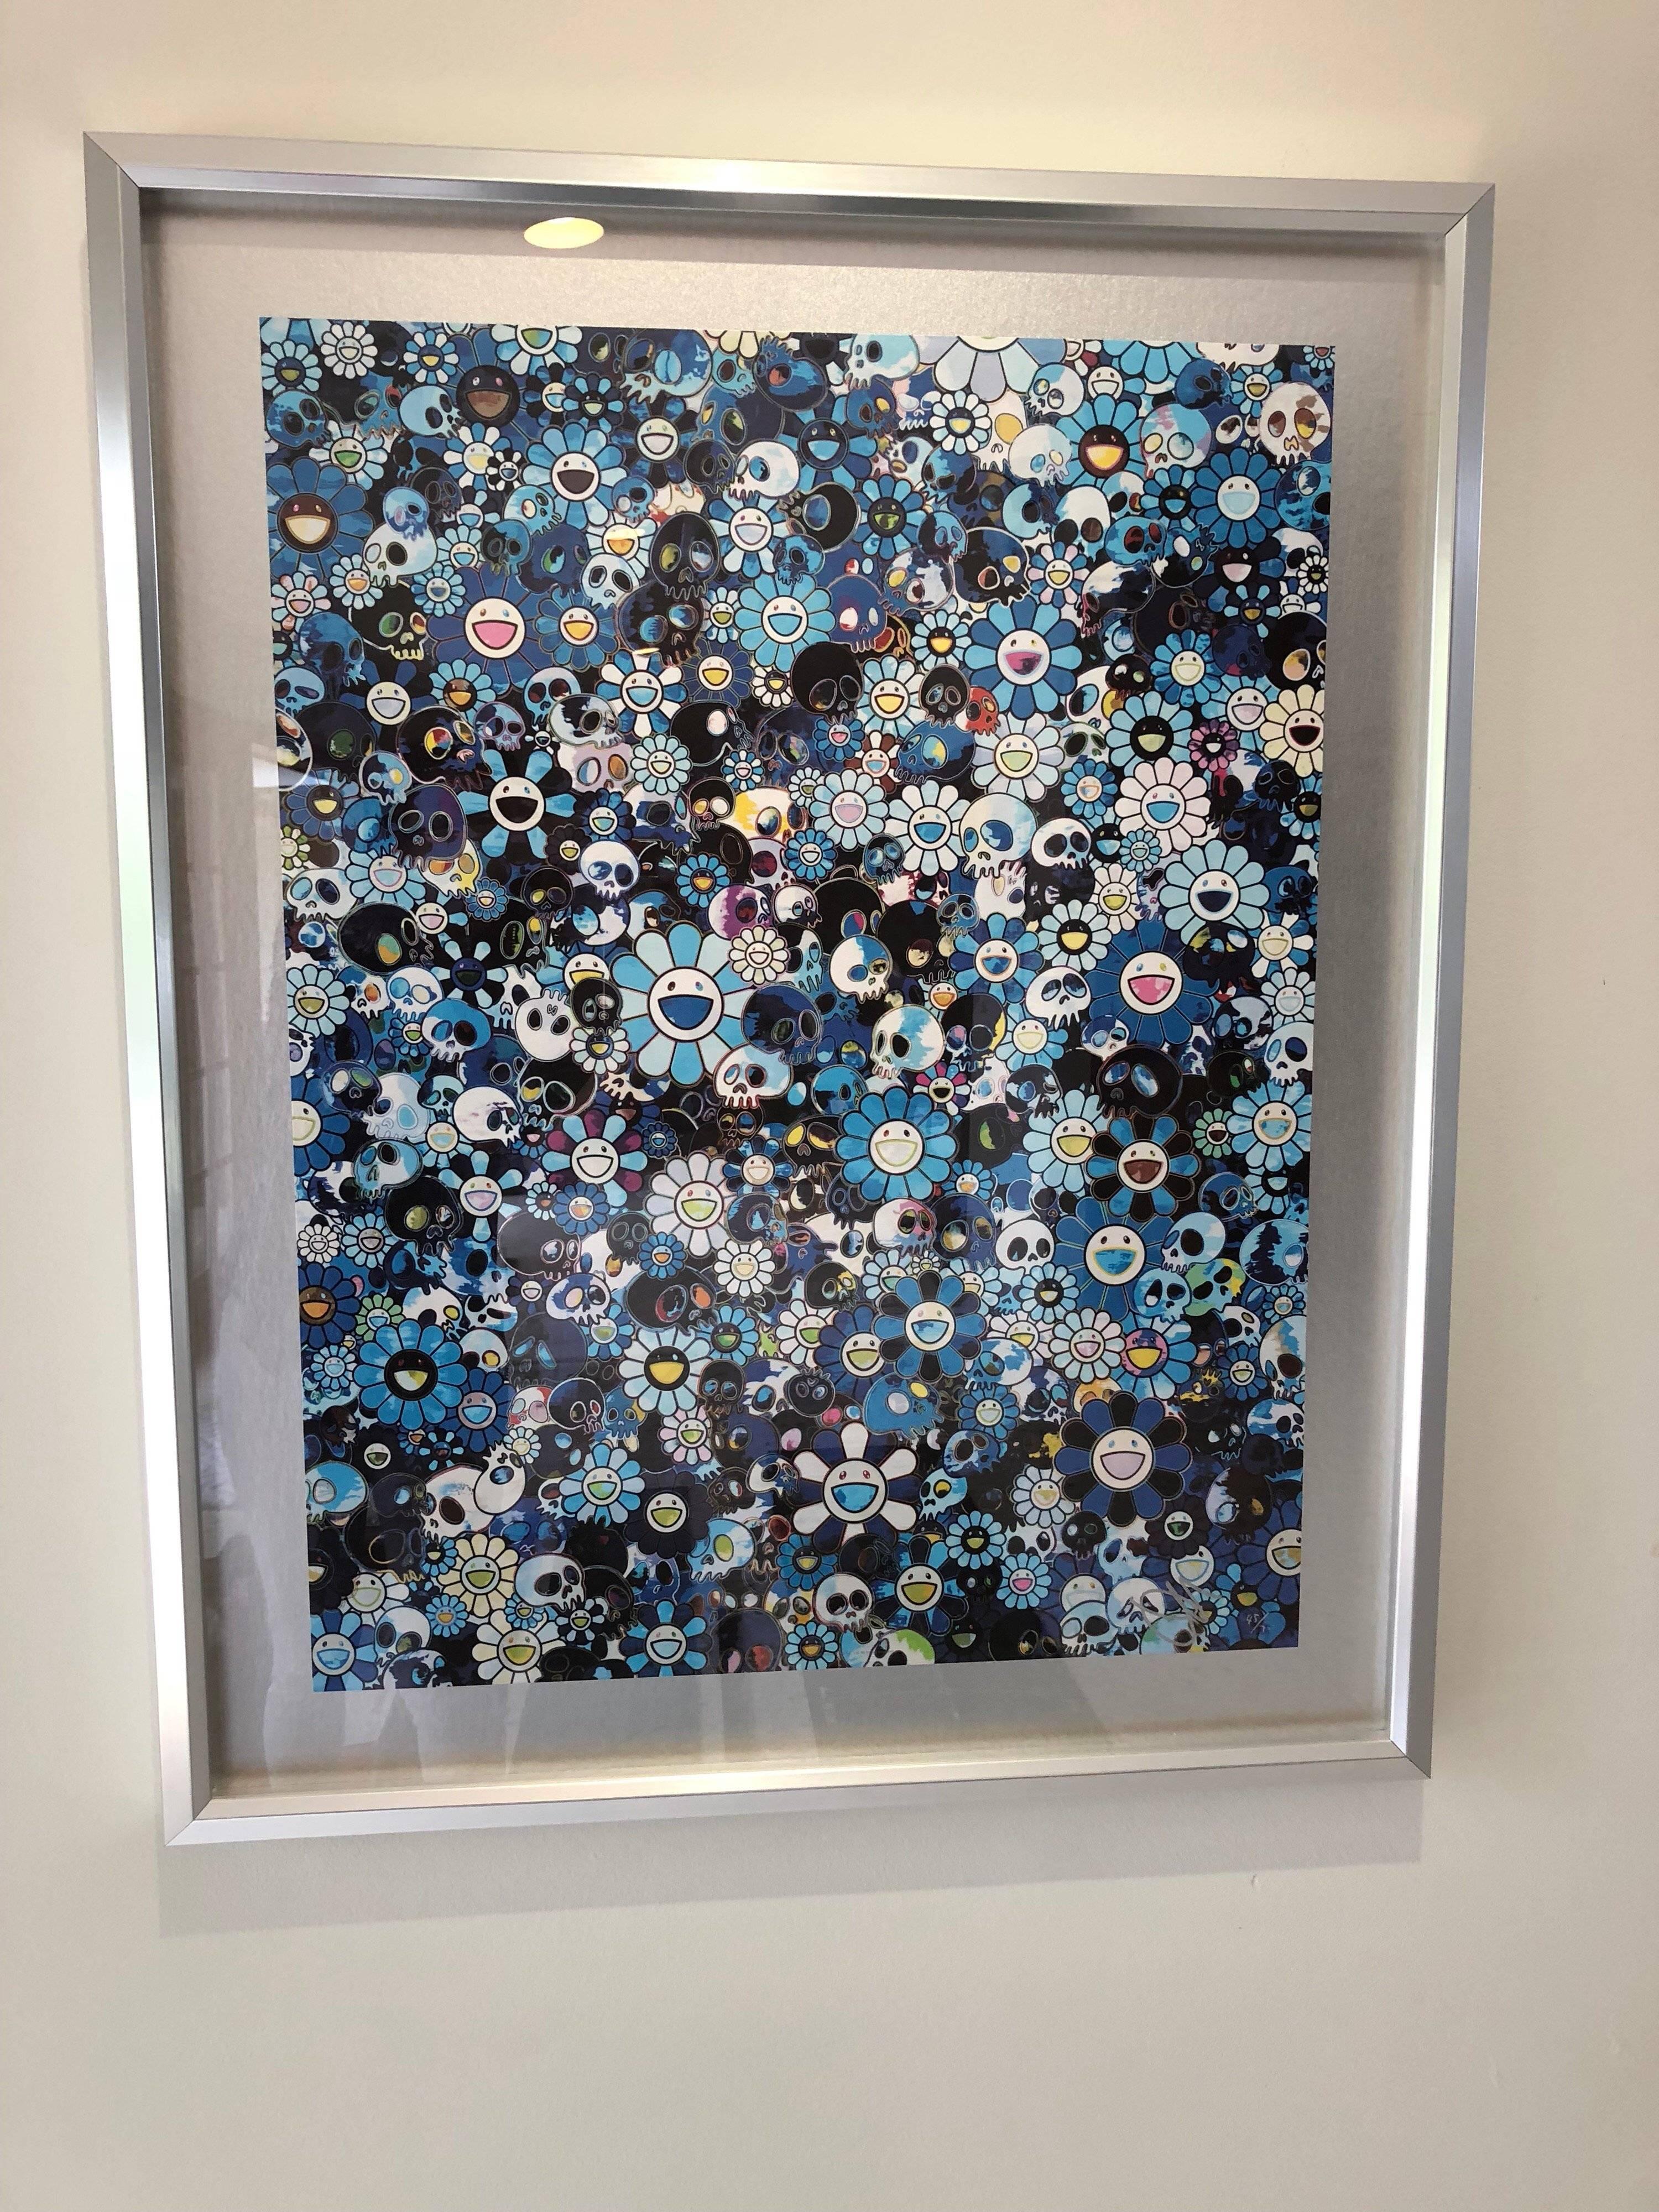 Takashi Murakami - Offset print - Blue Flower and Skulls 2012 at